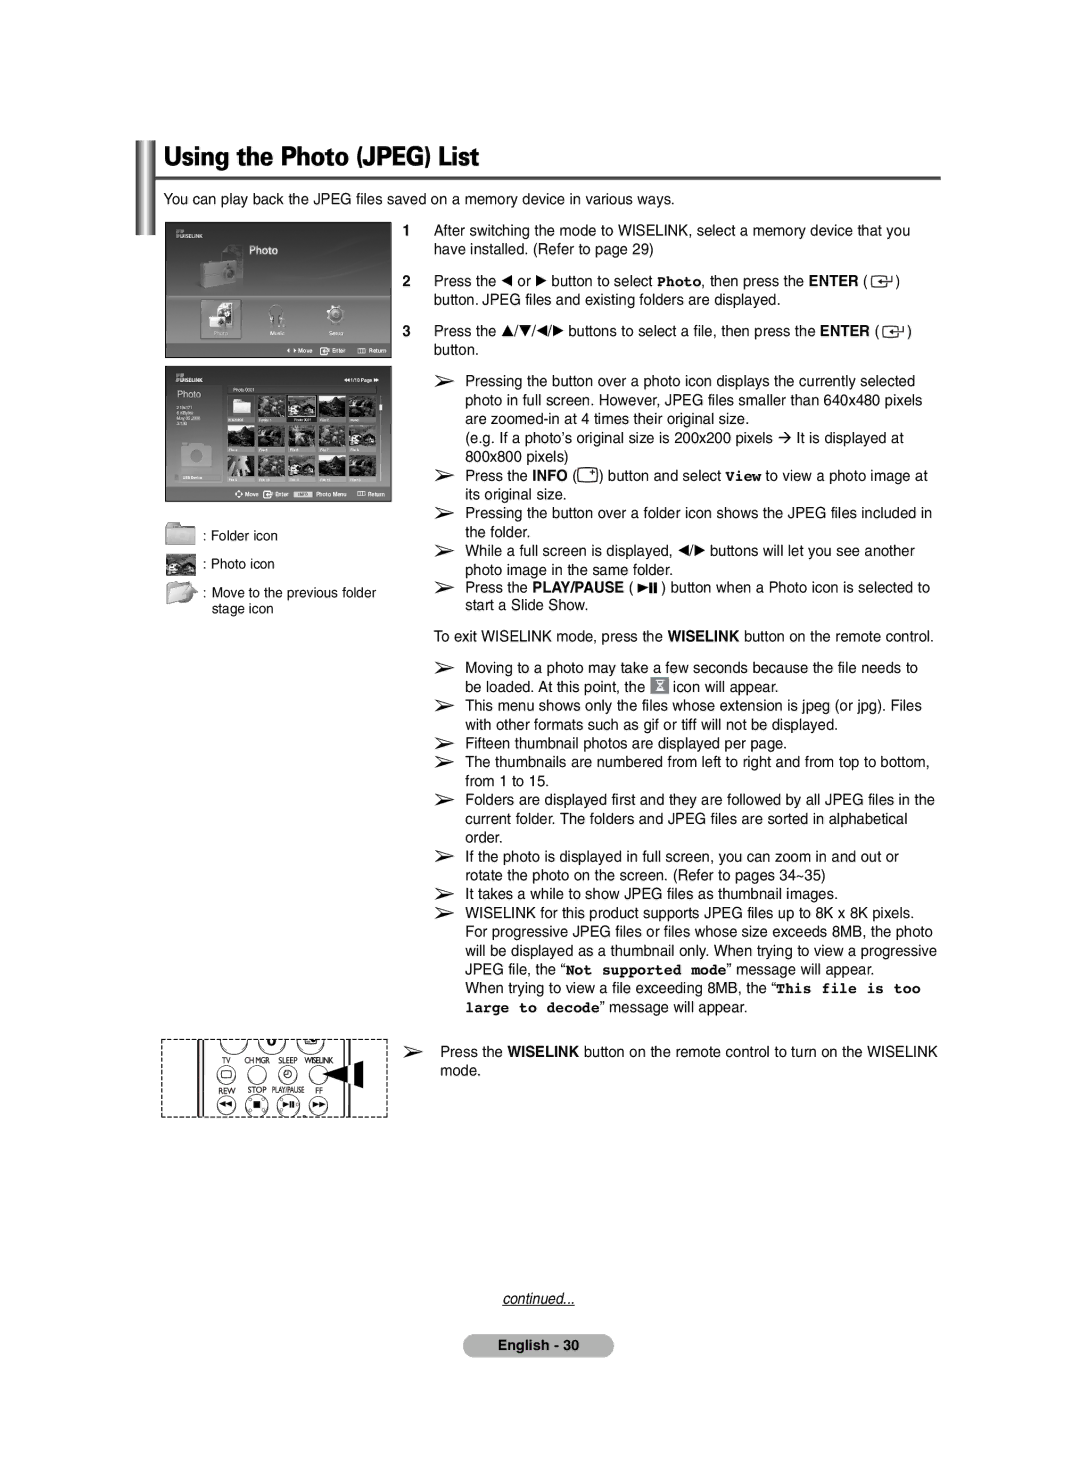 Samsung BN68-00990V-03 manual Using the Photo Jpeg List, 800x800 pixels 